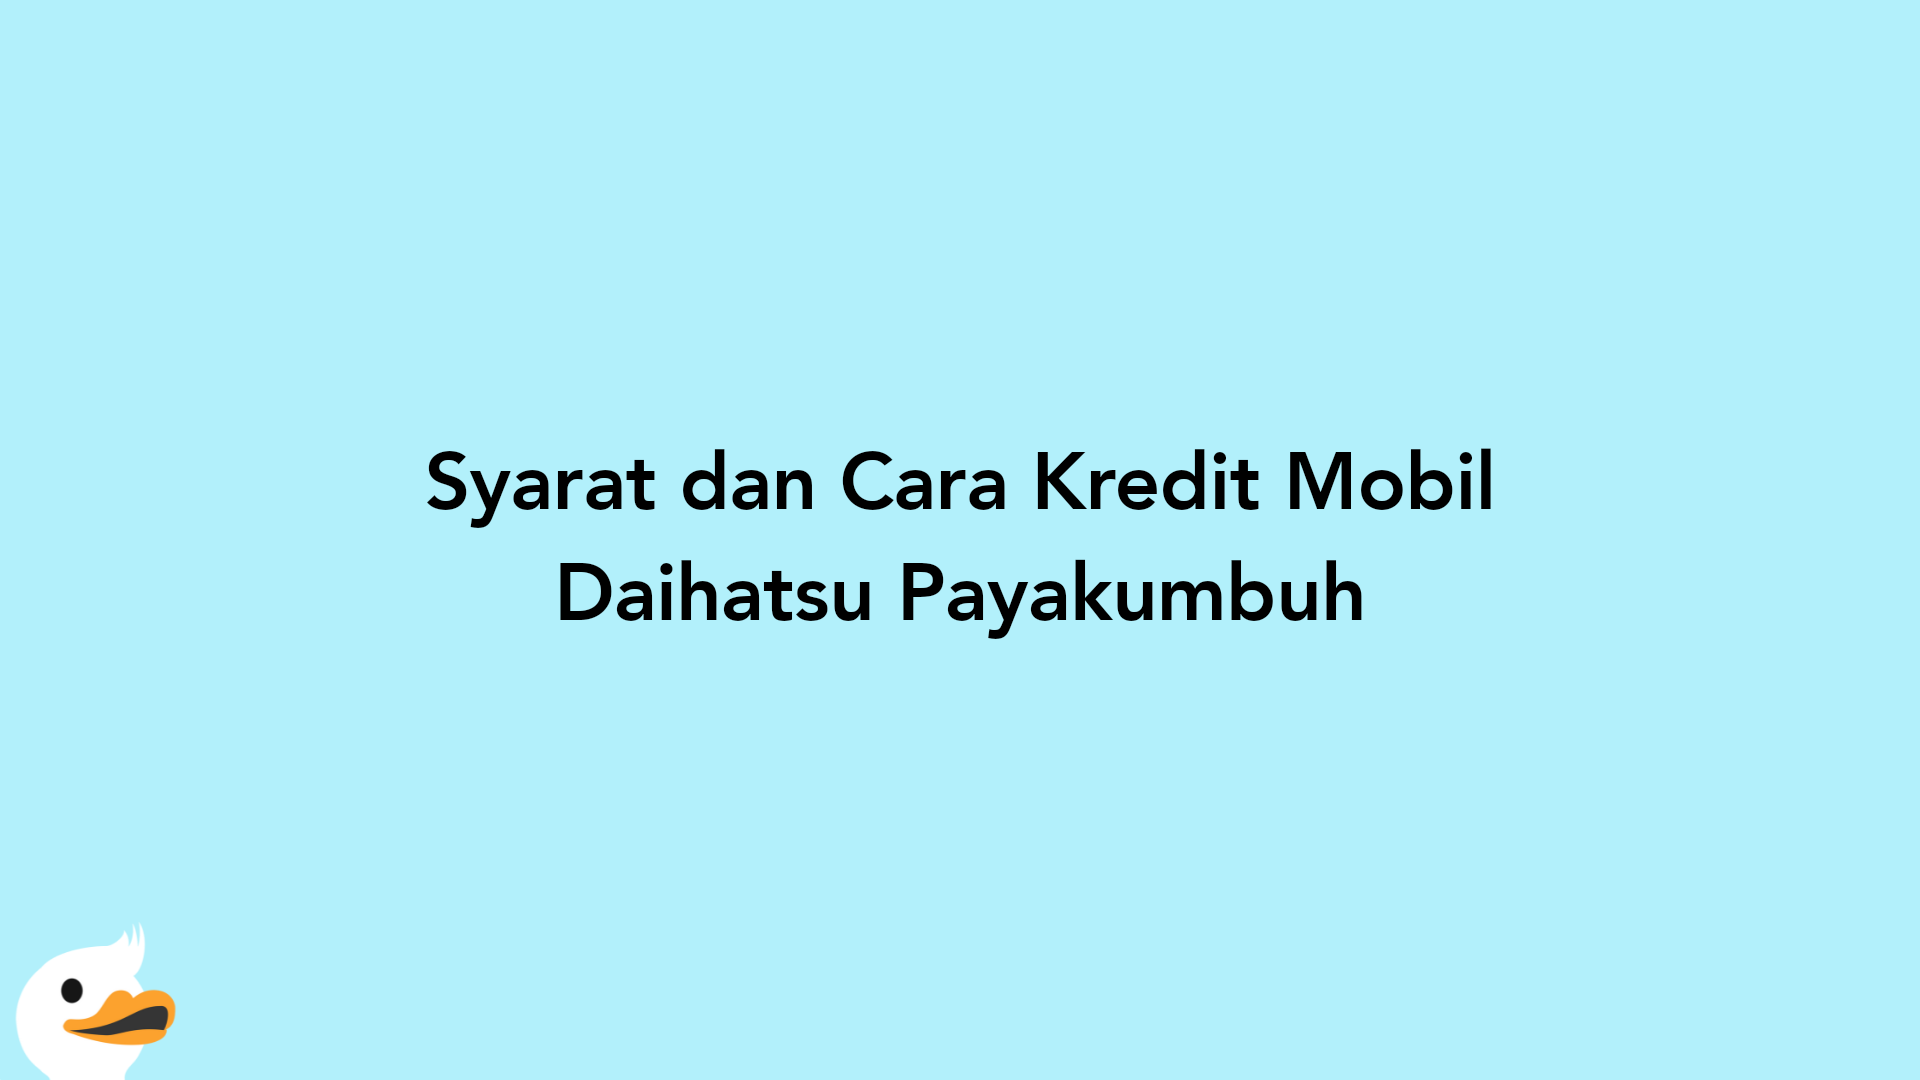 Syarat dan Cara Kredit Mobil Daihatsu Payakumbuh